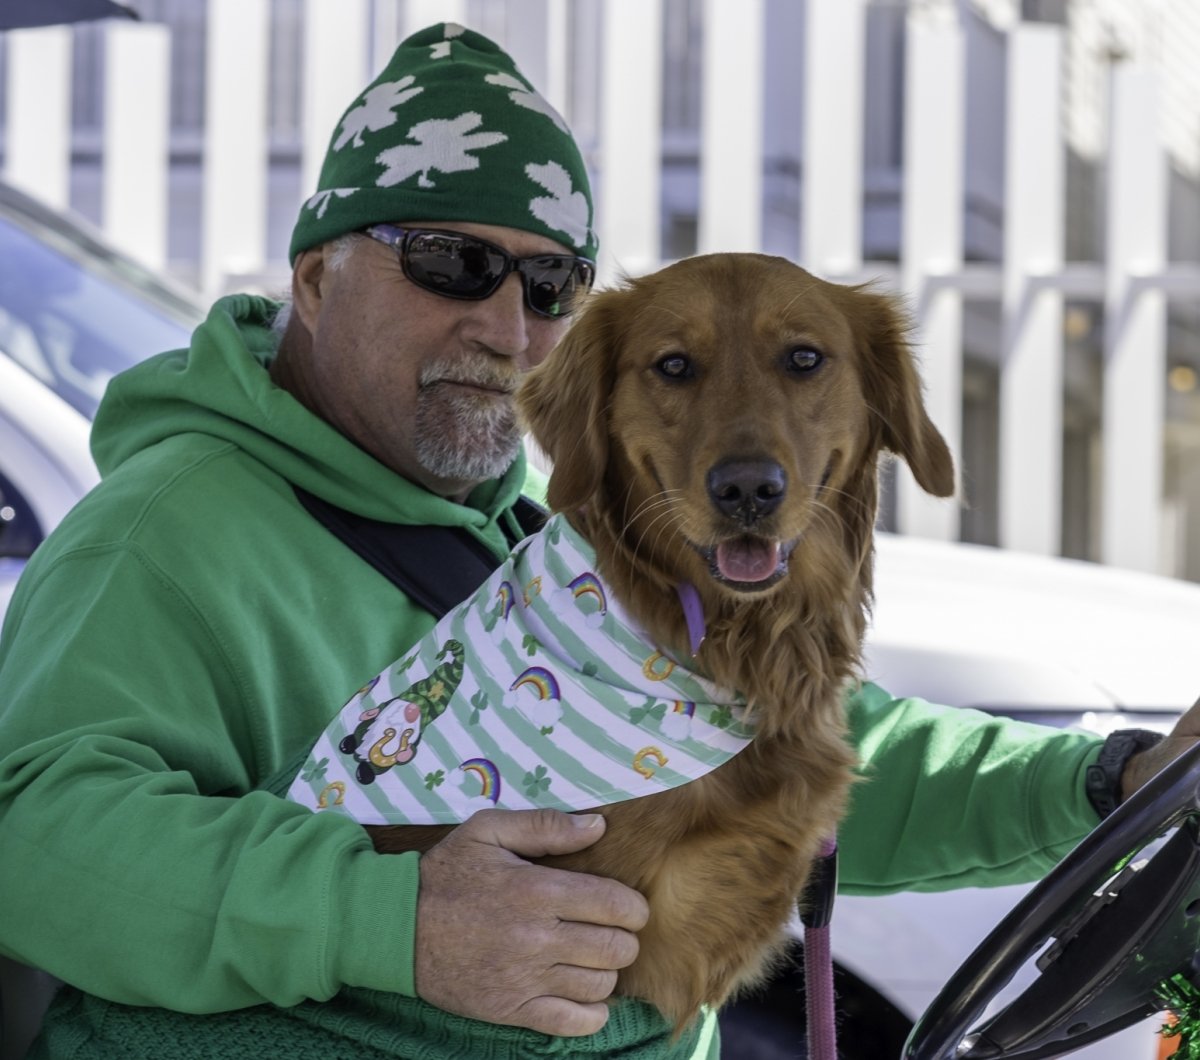 Man & dog dressed in green